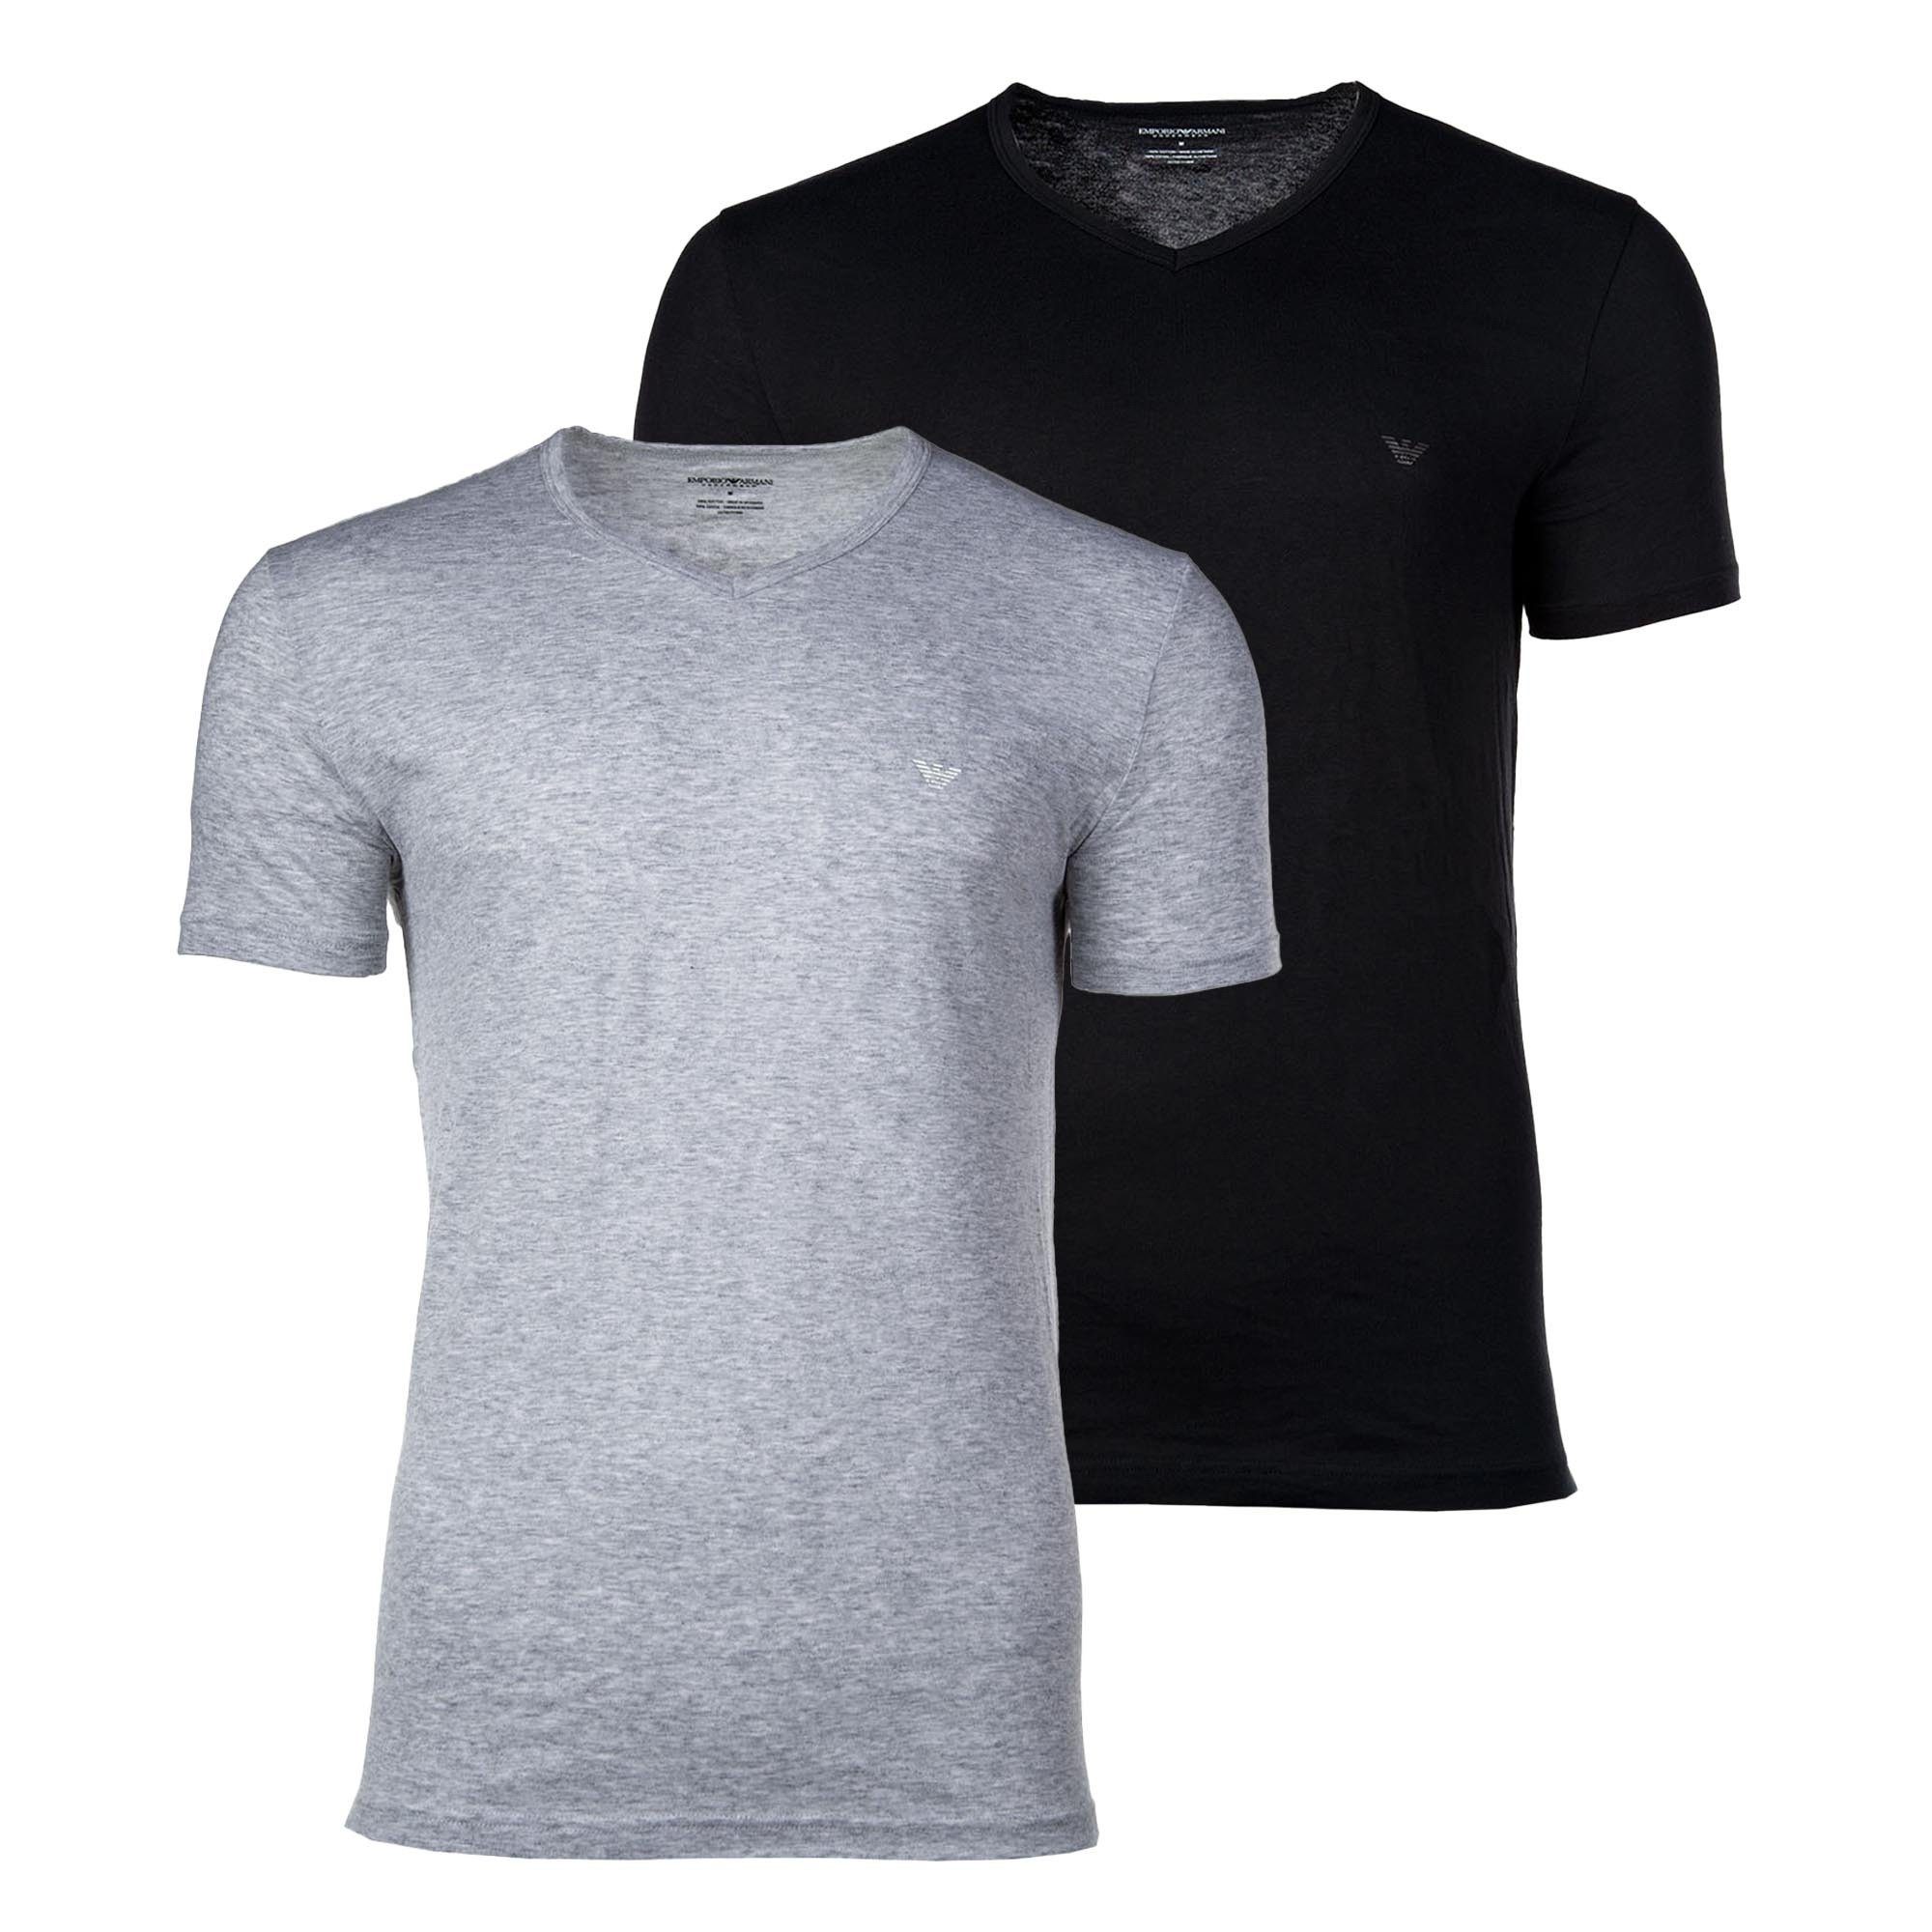 2er Pack V-Neck, - Armani Emporio V-Ausschnitt Herren Schwarz/Grau T-Shirt T-Shirt